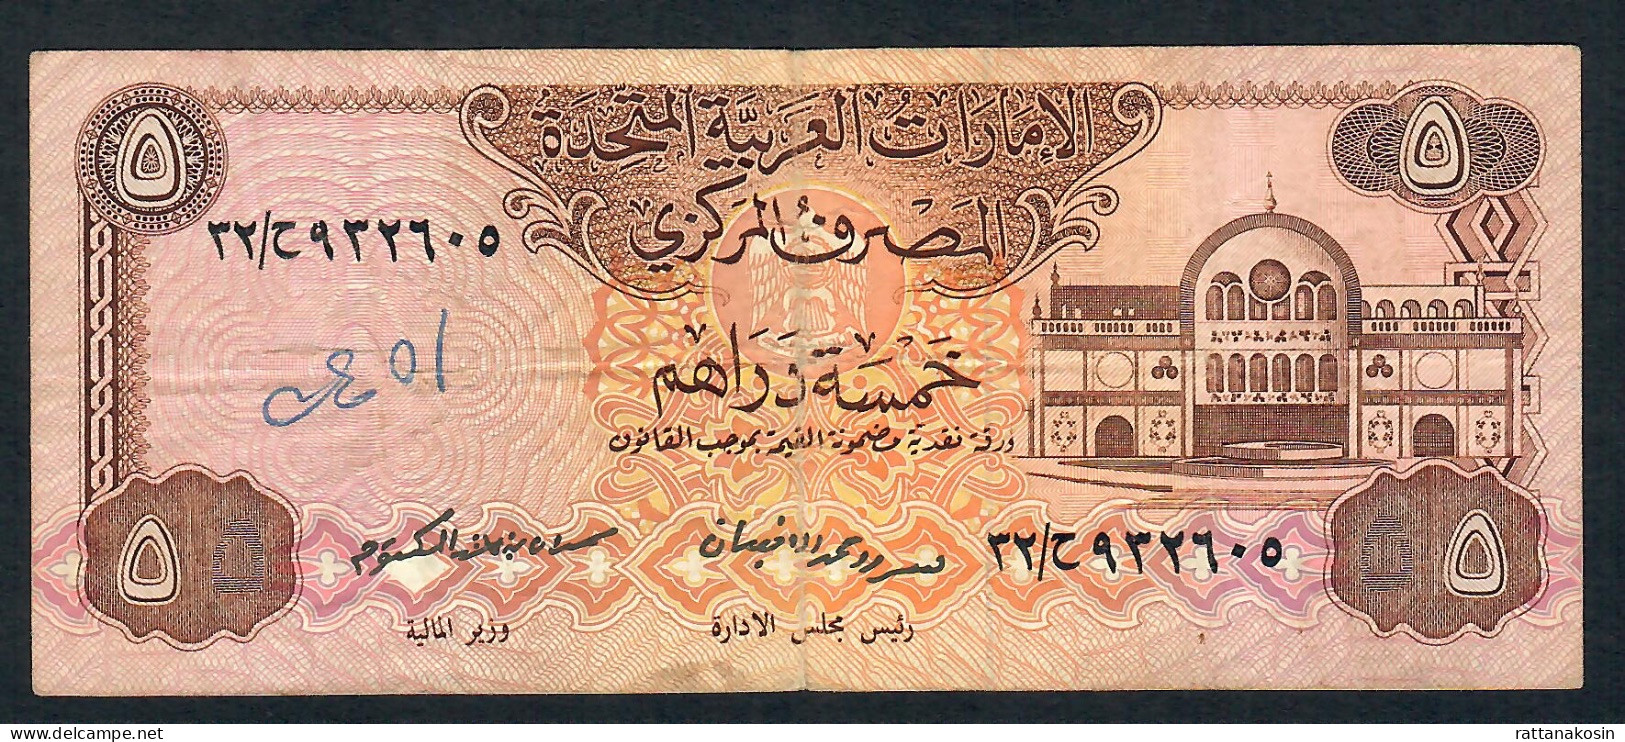 U.A.E.  P7 5 DIRHAMS 1982  Signature 1 FINE - Emirats Arabes Unis